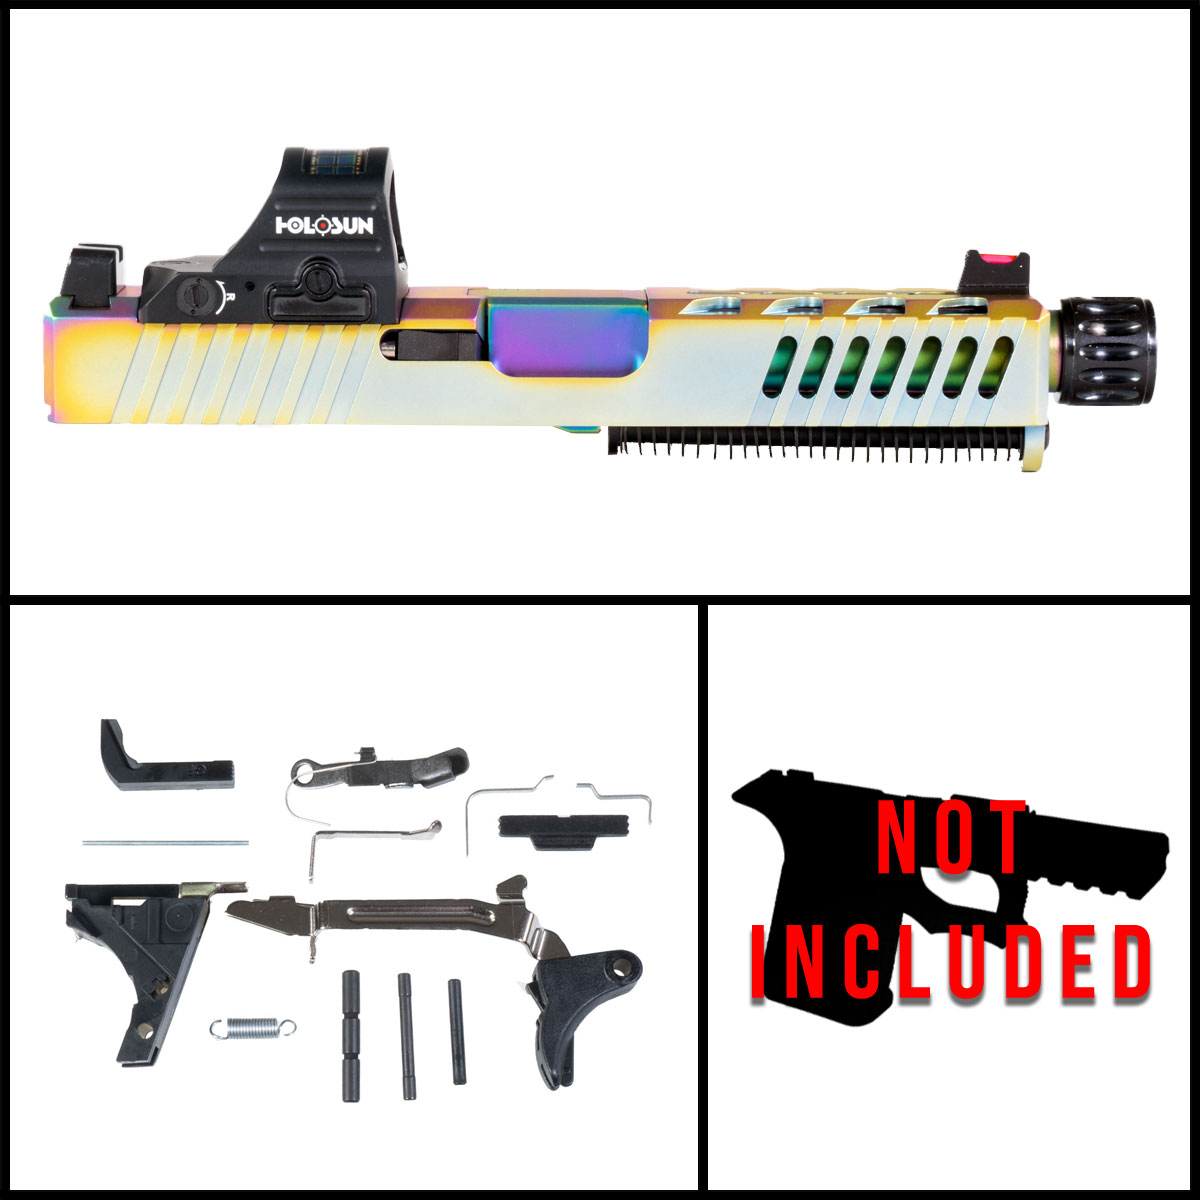 DTT 'Spectrum w/ HS507C-X2' 9mm Full Pistol Build Kits (Everything Minus Frame) - Glock 19 Gen 1-3 Compatible